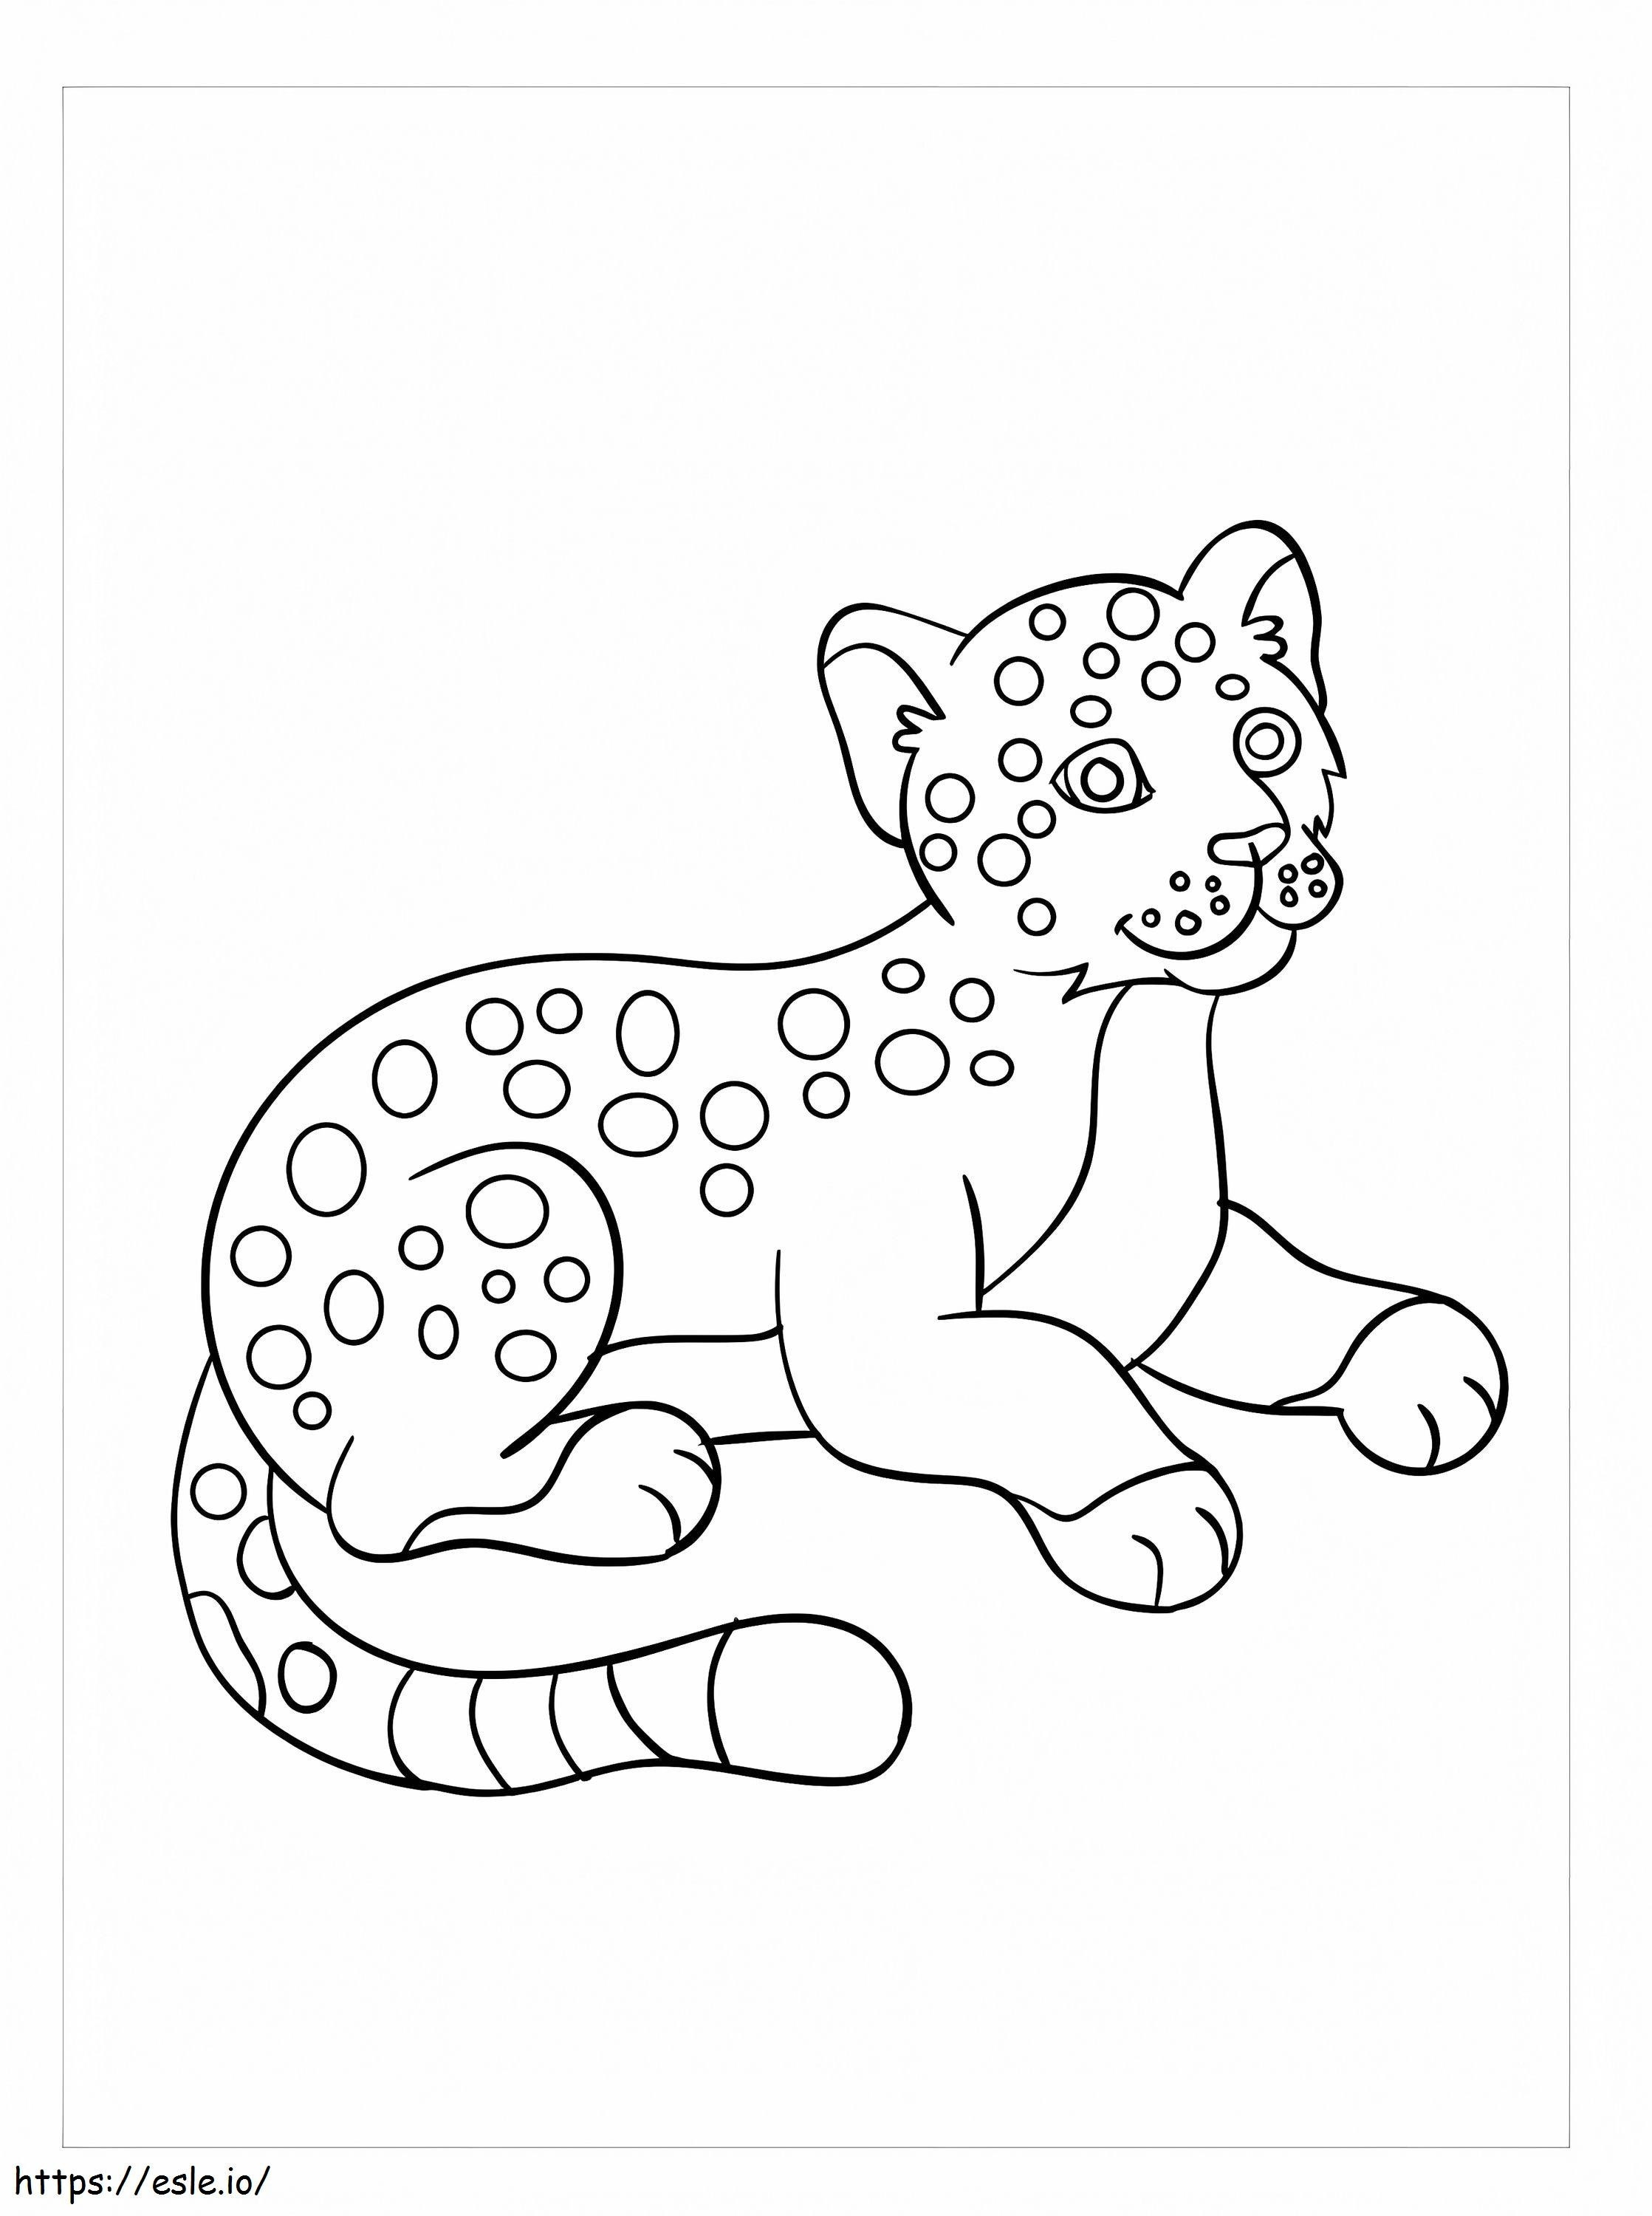 Little Reclining Jaguar coloring page